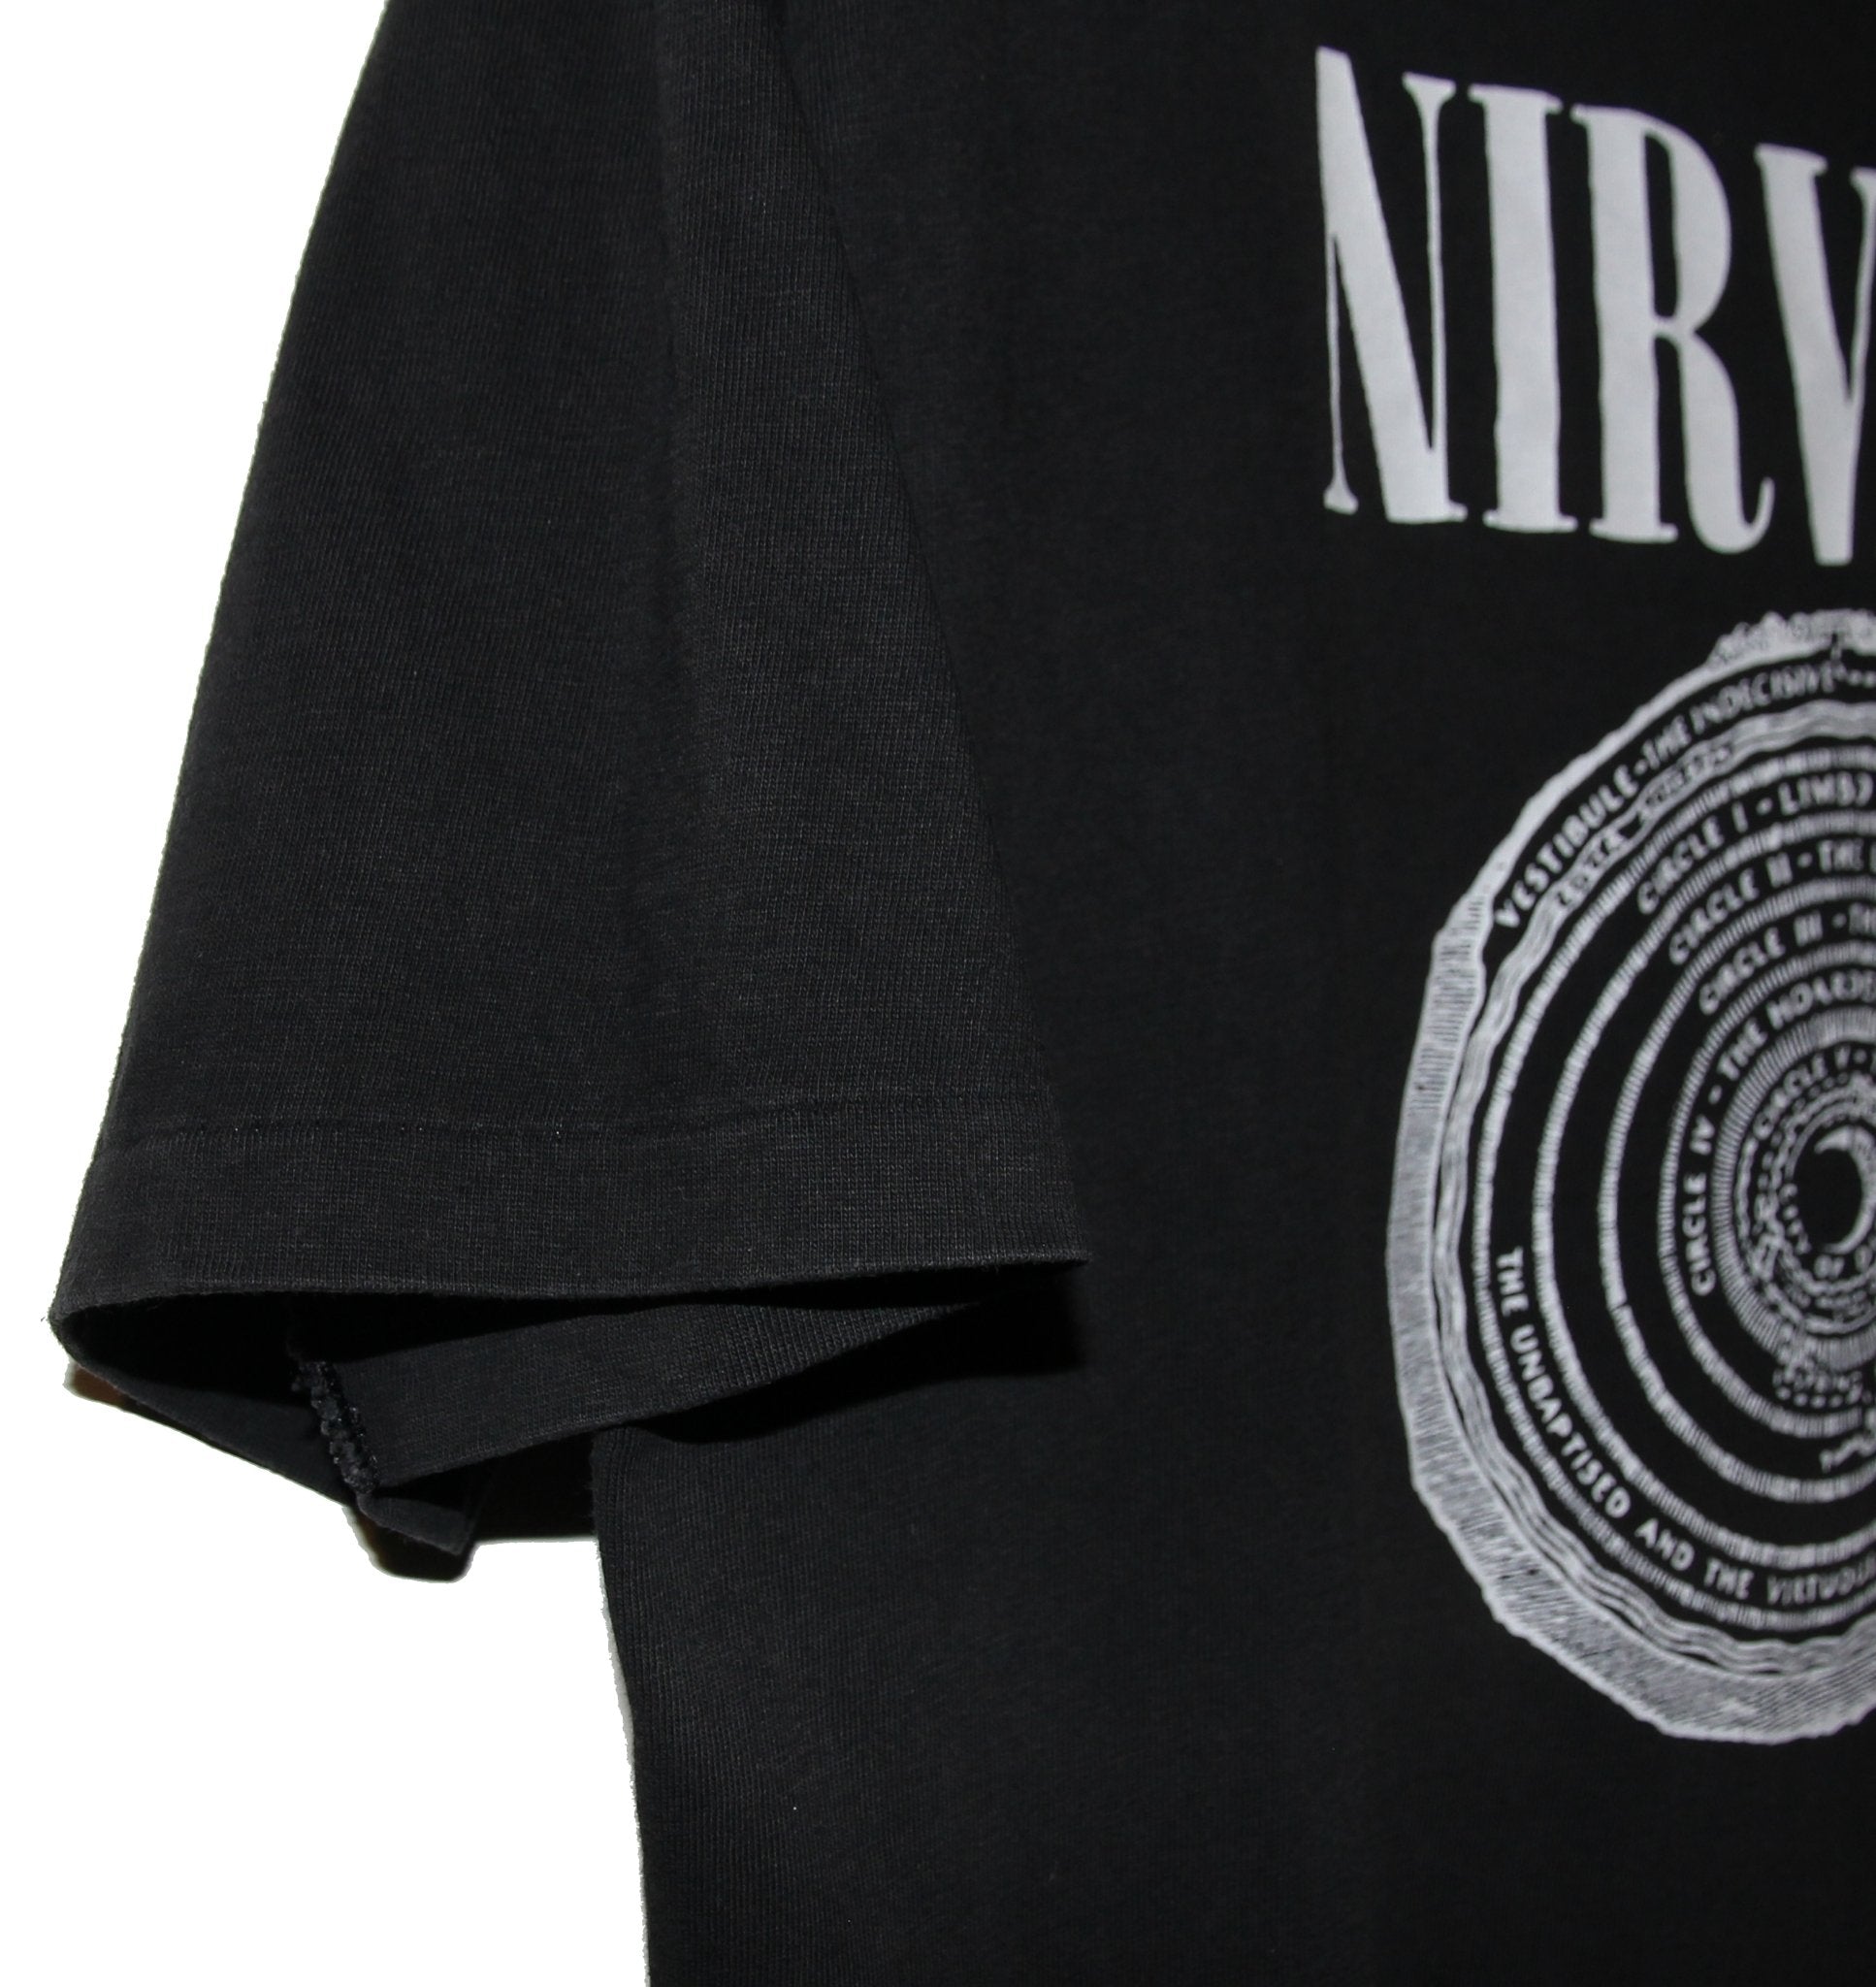 Nirvana 1991 Vestibule Shirt - Faded AU